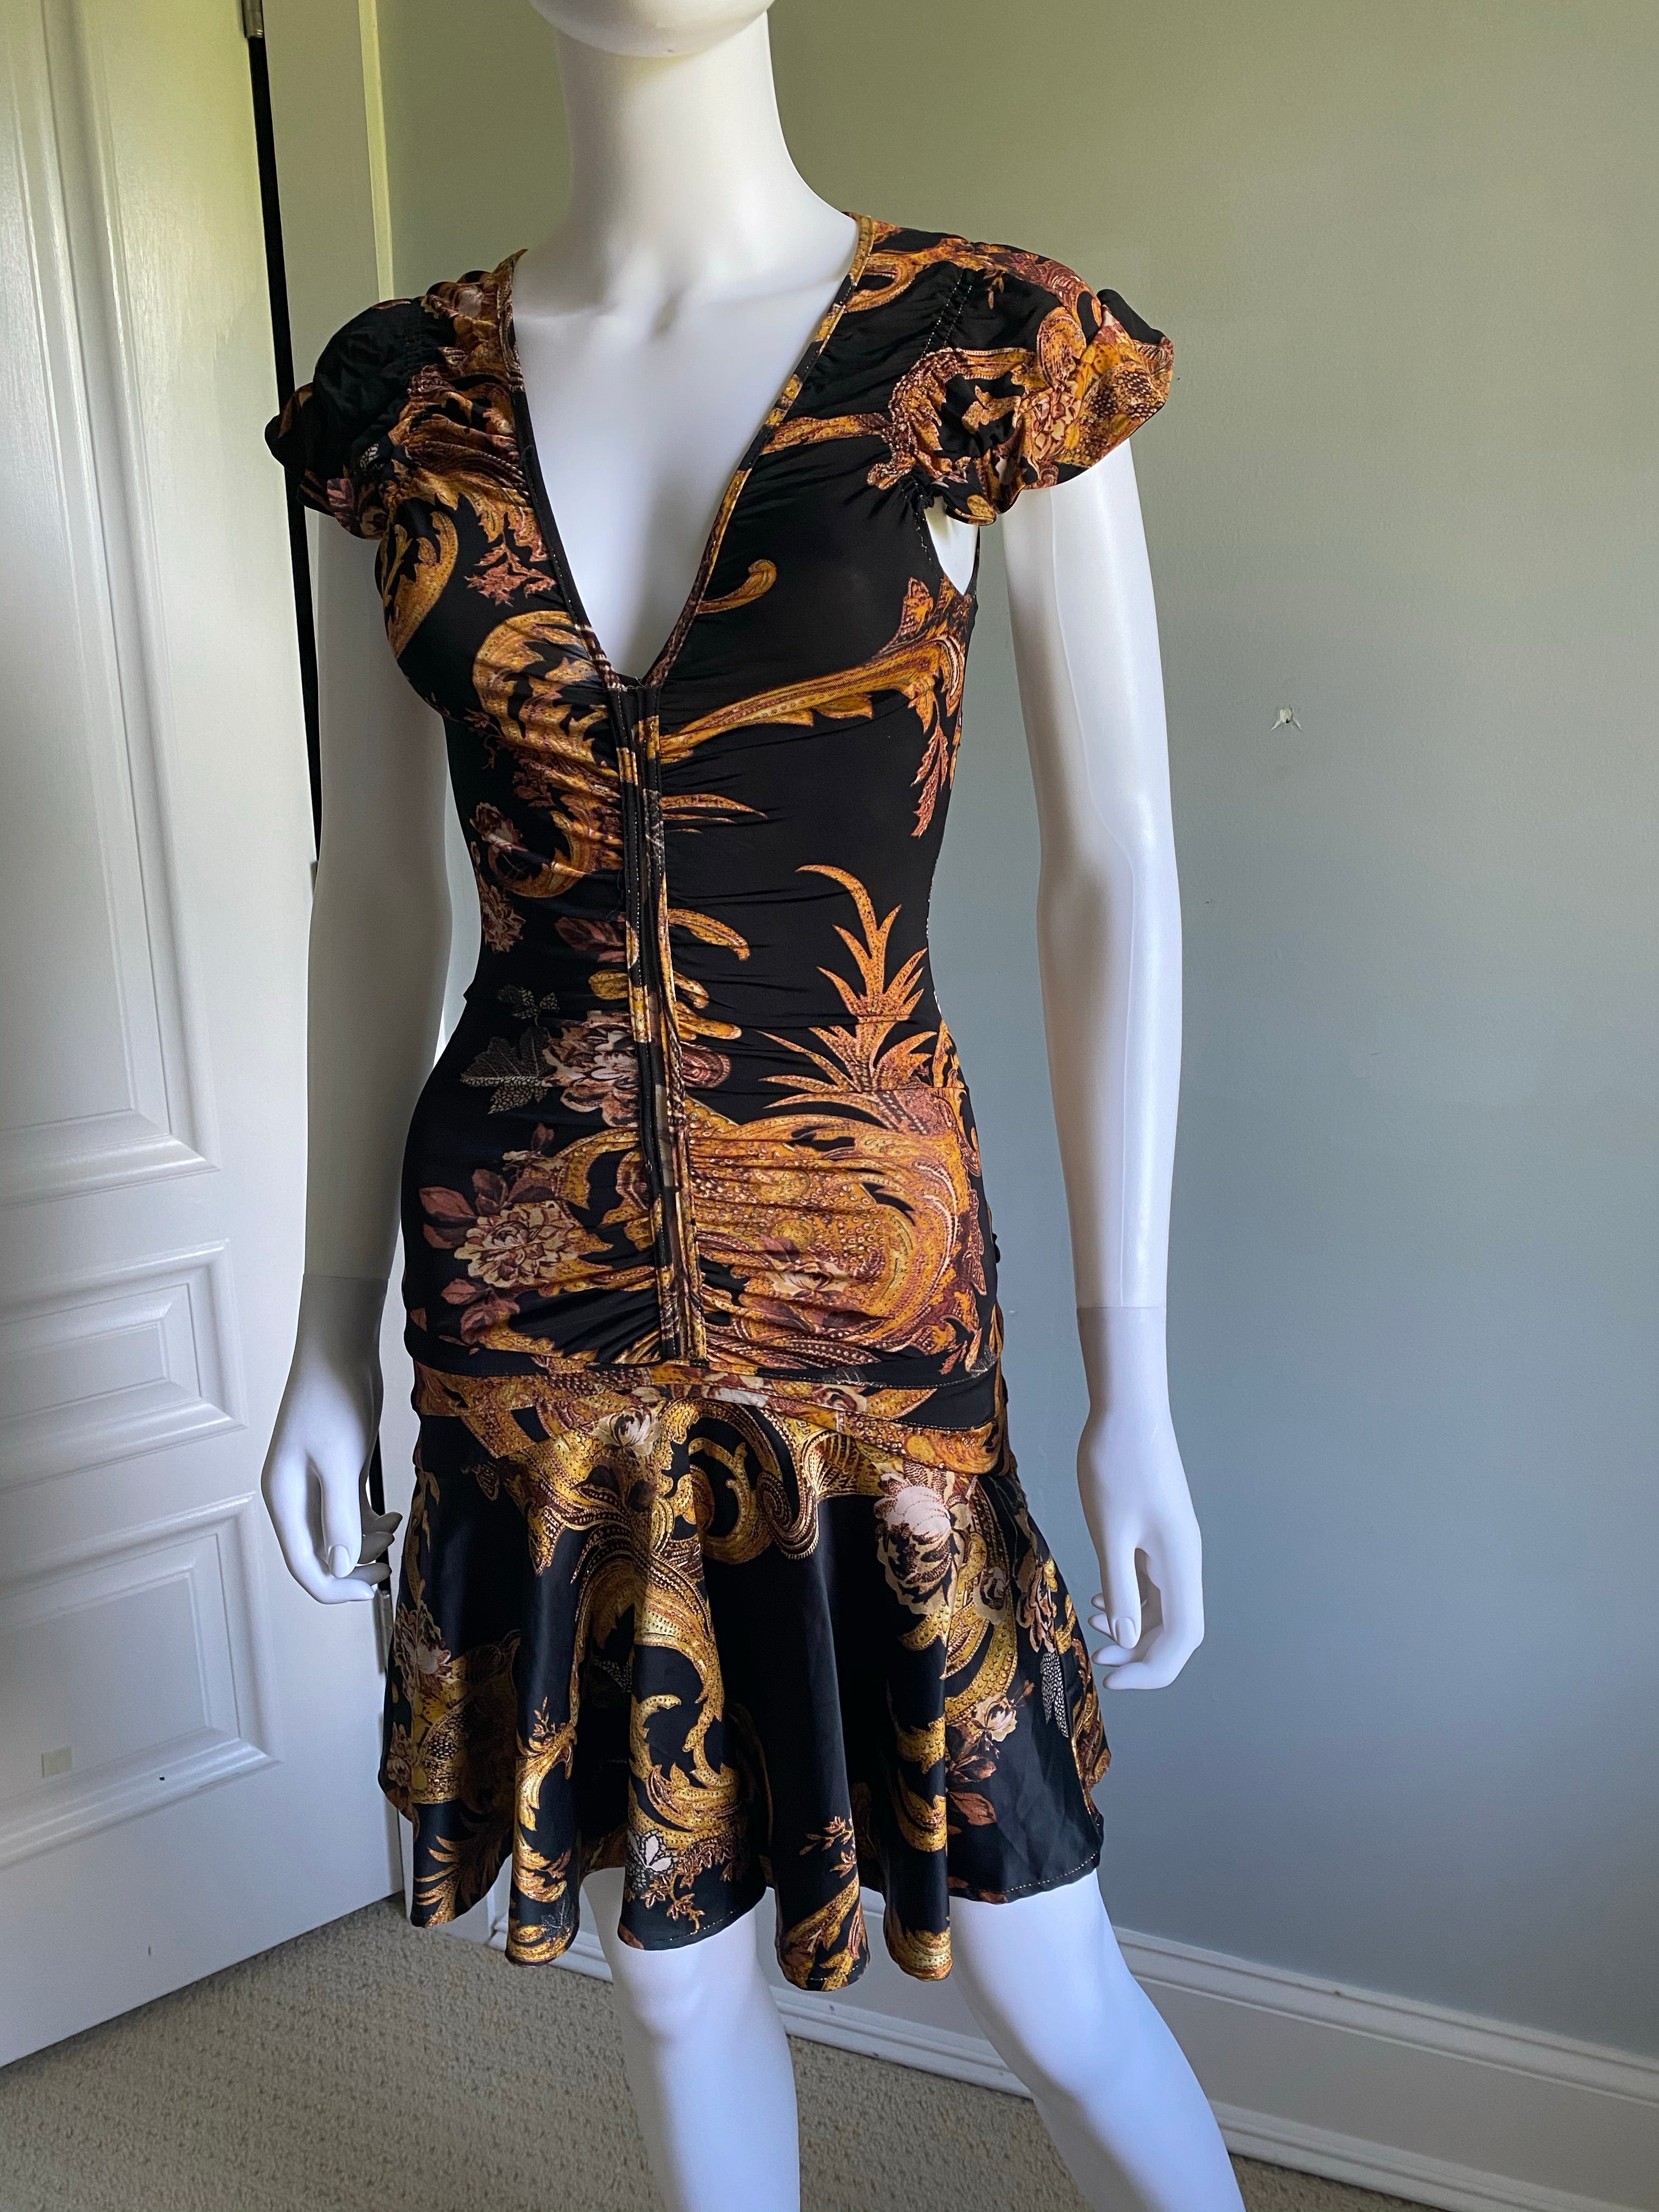 Roberto Cavalli for Just Cavalli Baroque Dress